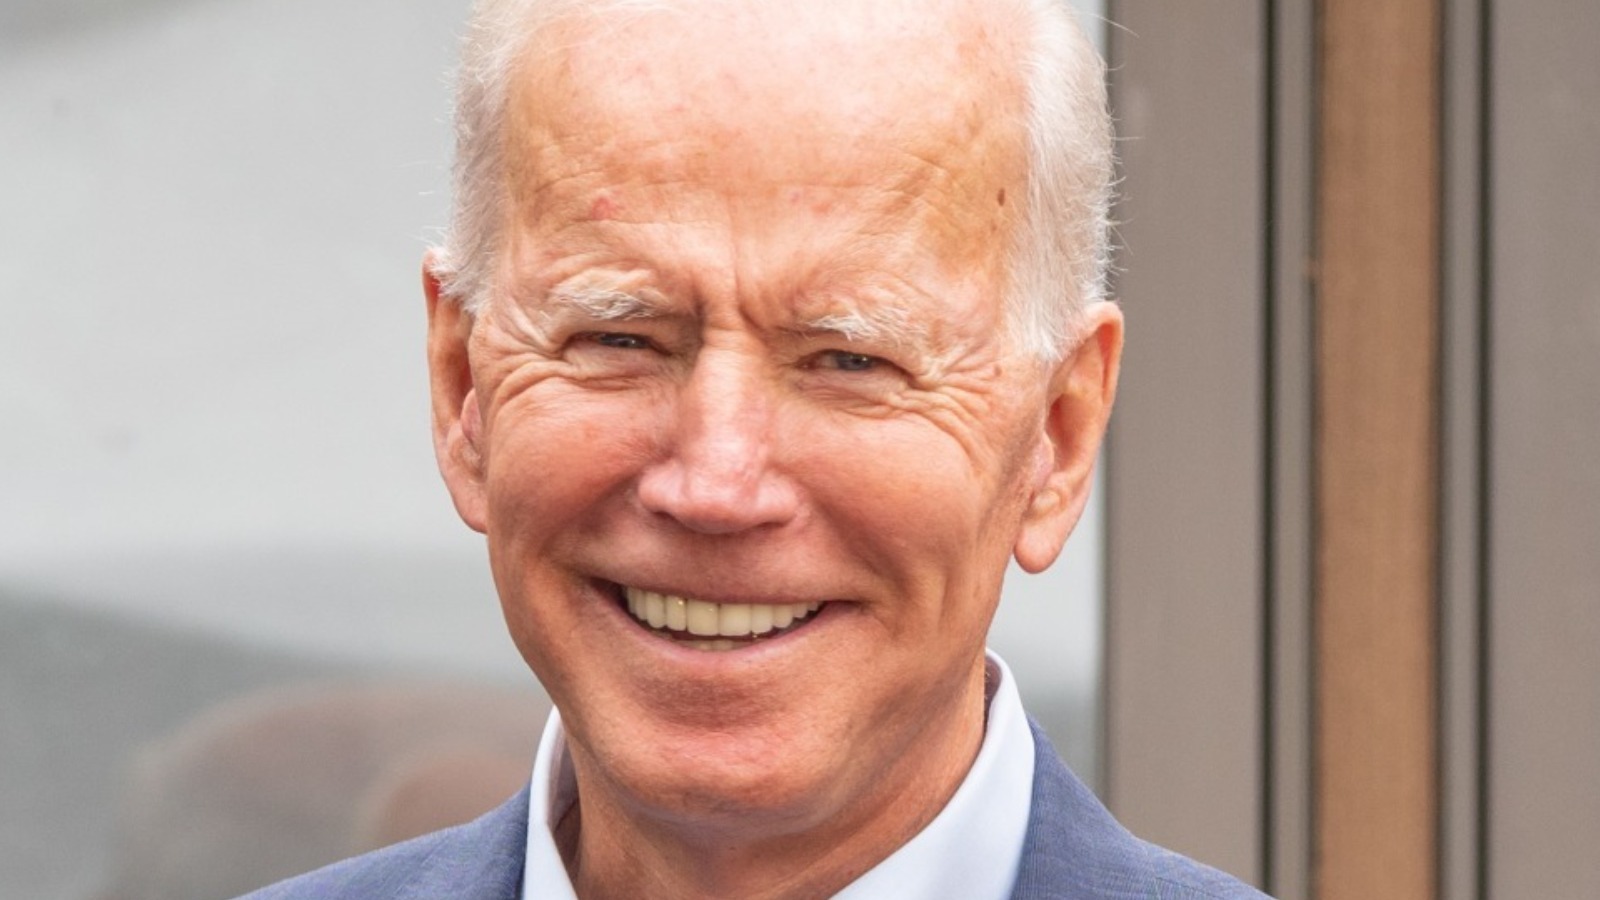 Joe Biden's Law & Order: SVU Cameo Hits Different Now